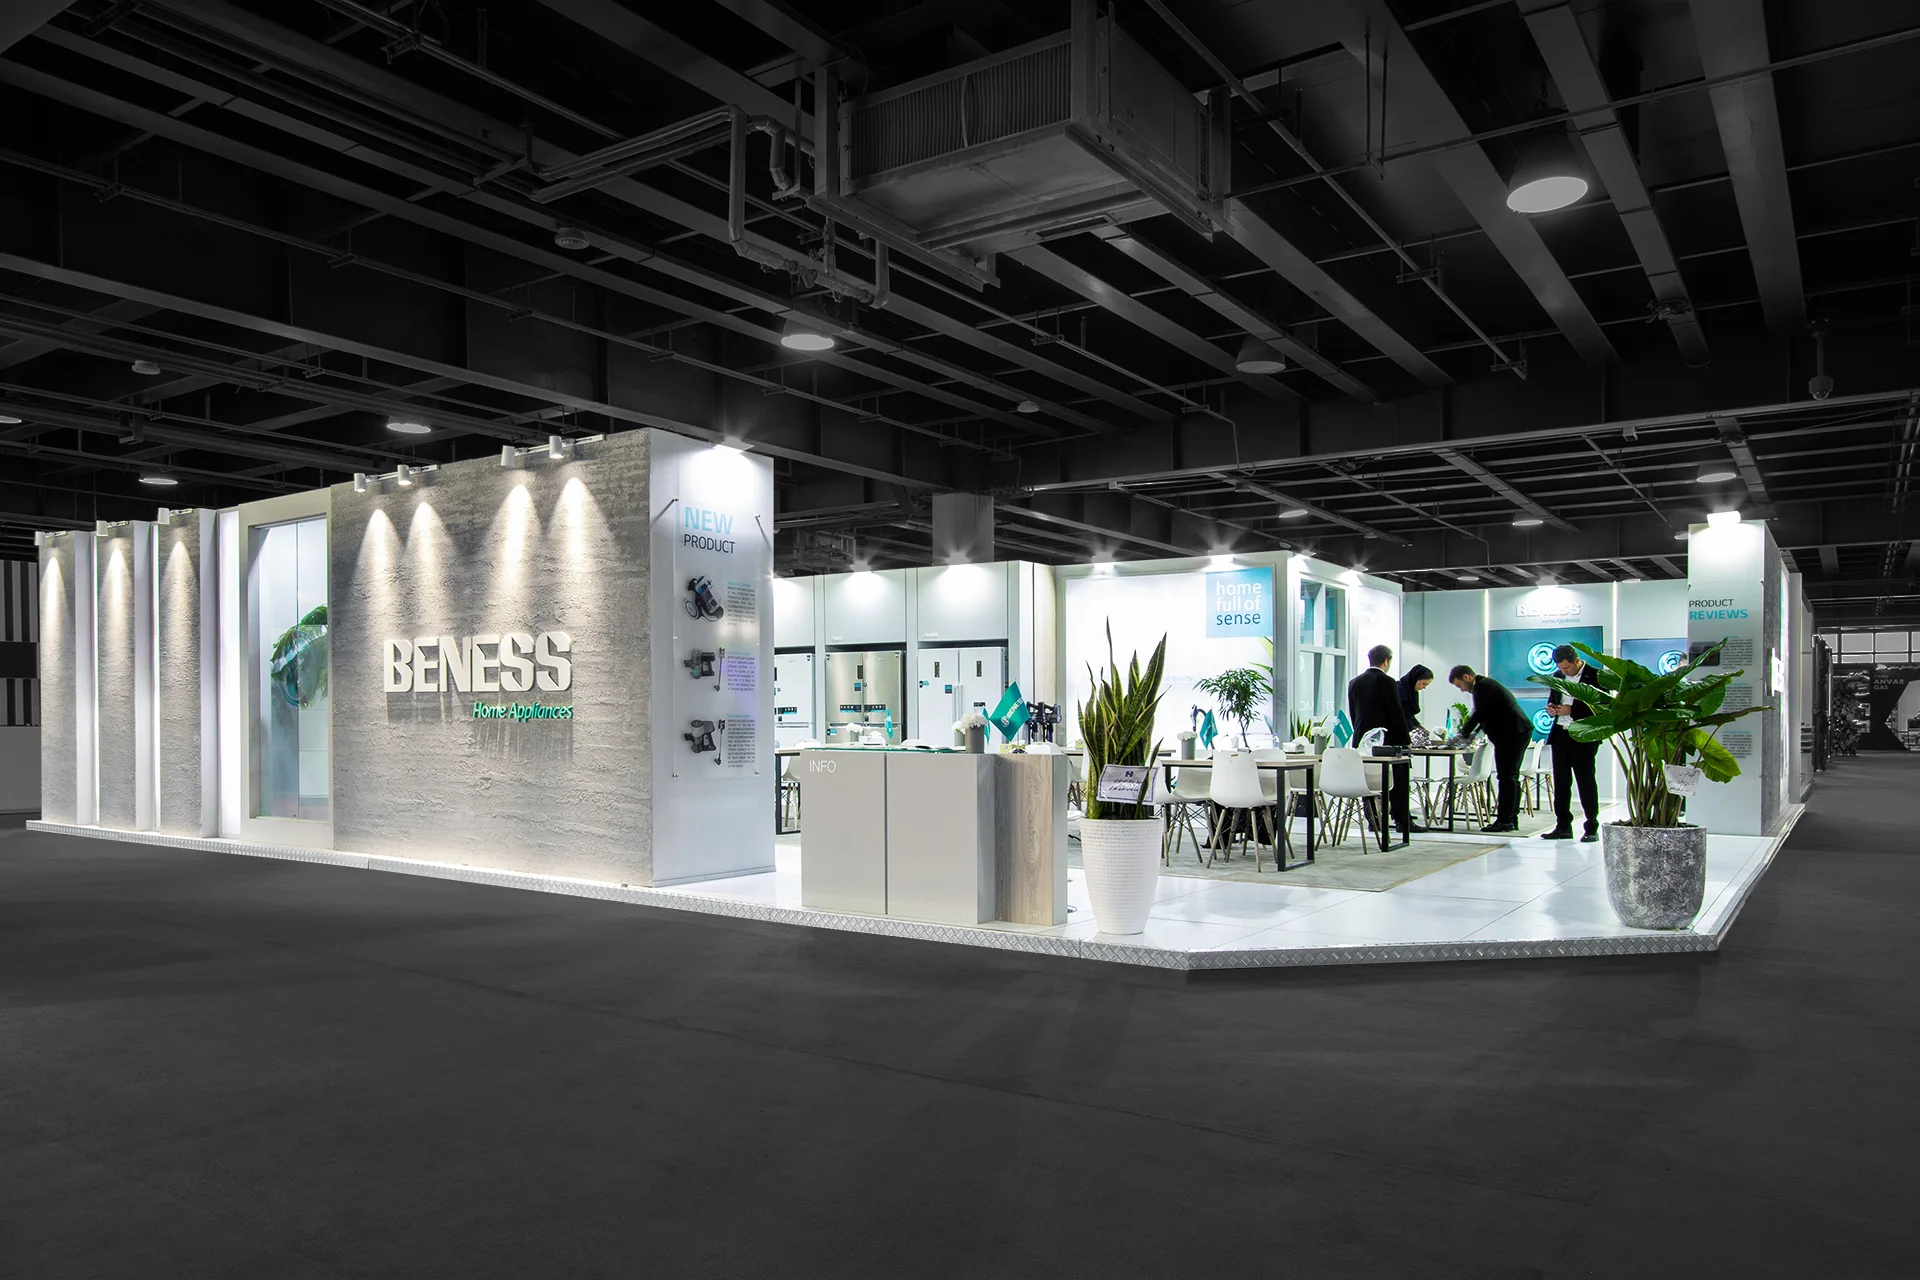   Beness-presentation-15 طراحی غرفه و غرفه سازی نمایشگاهی بنس نمایشگاه لوازم خانگی 1402 